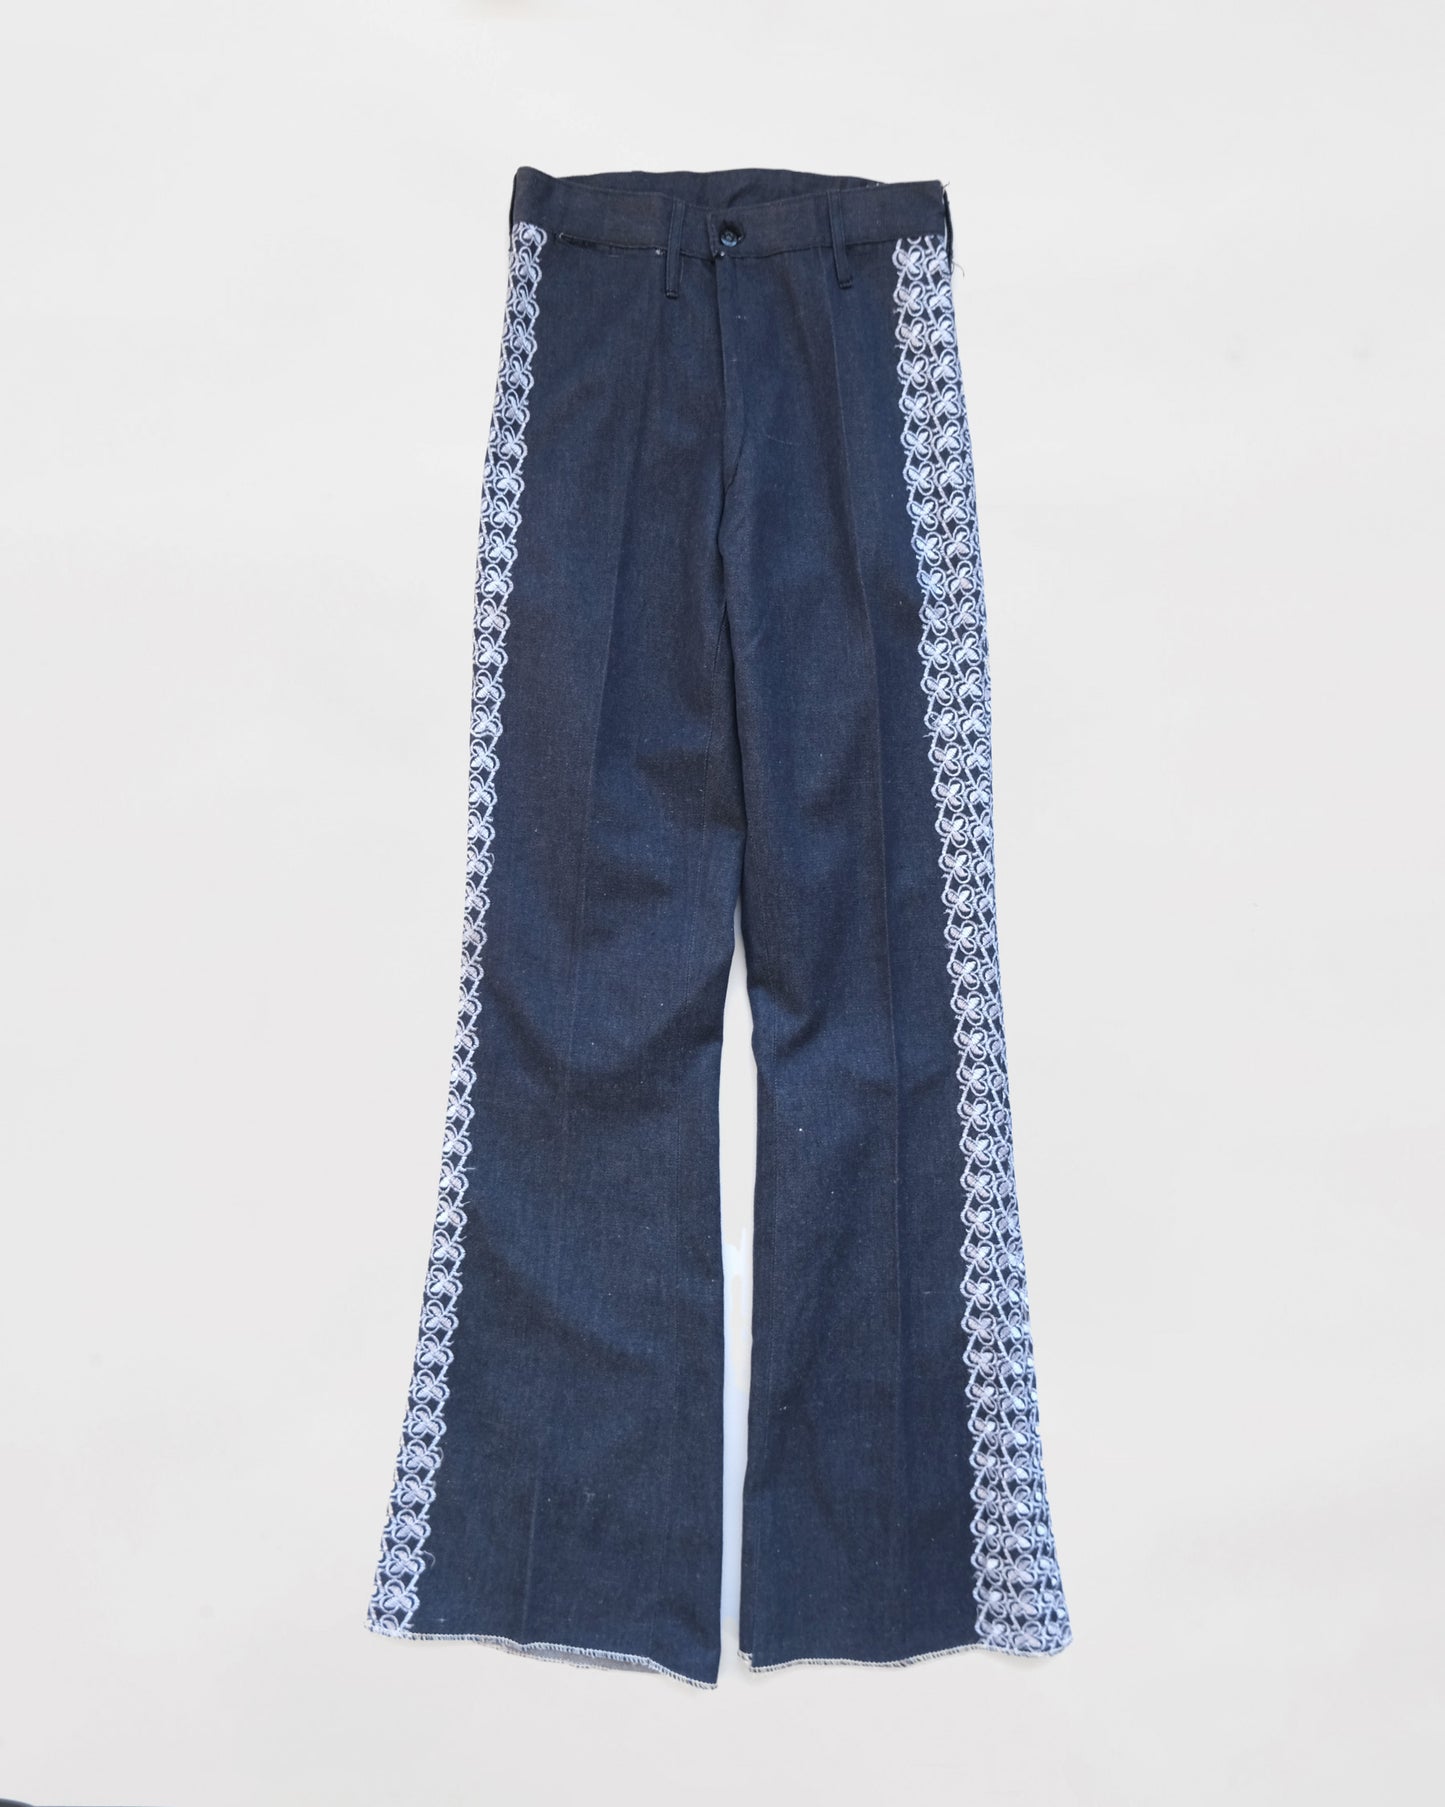 Embroidered Denim Pants